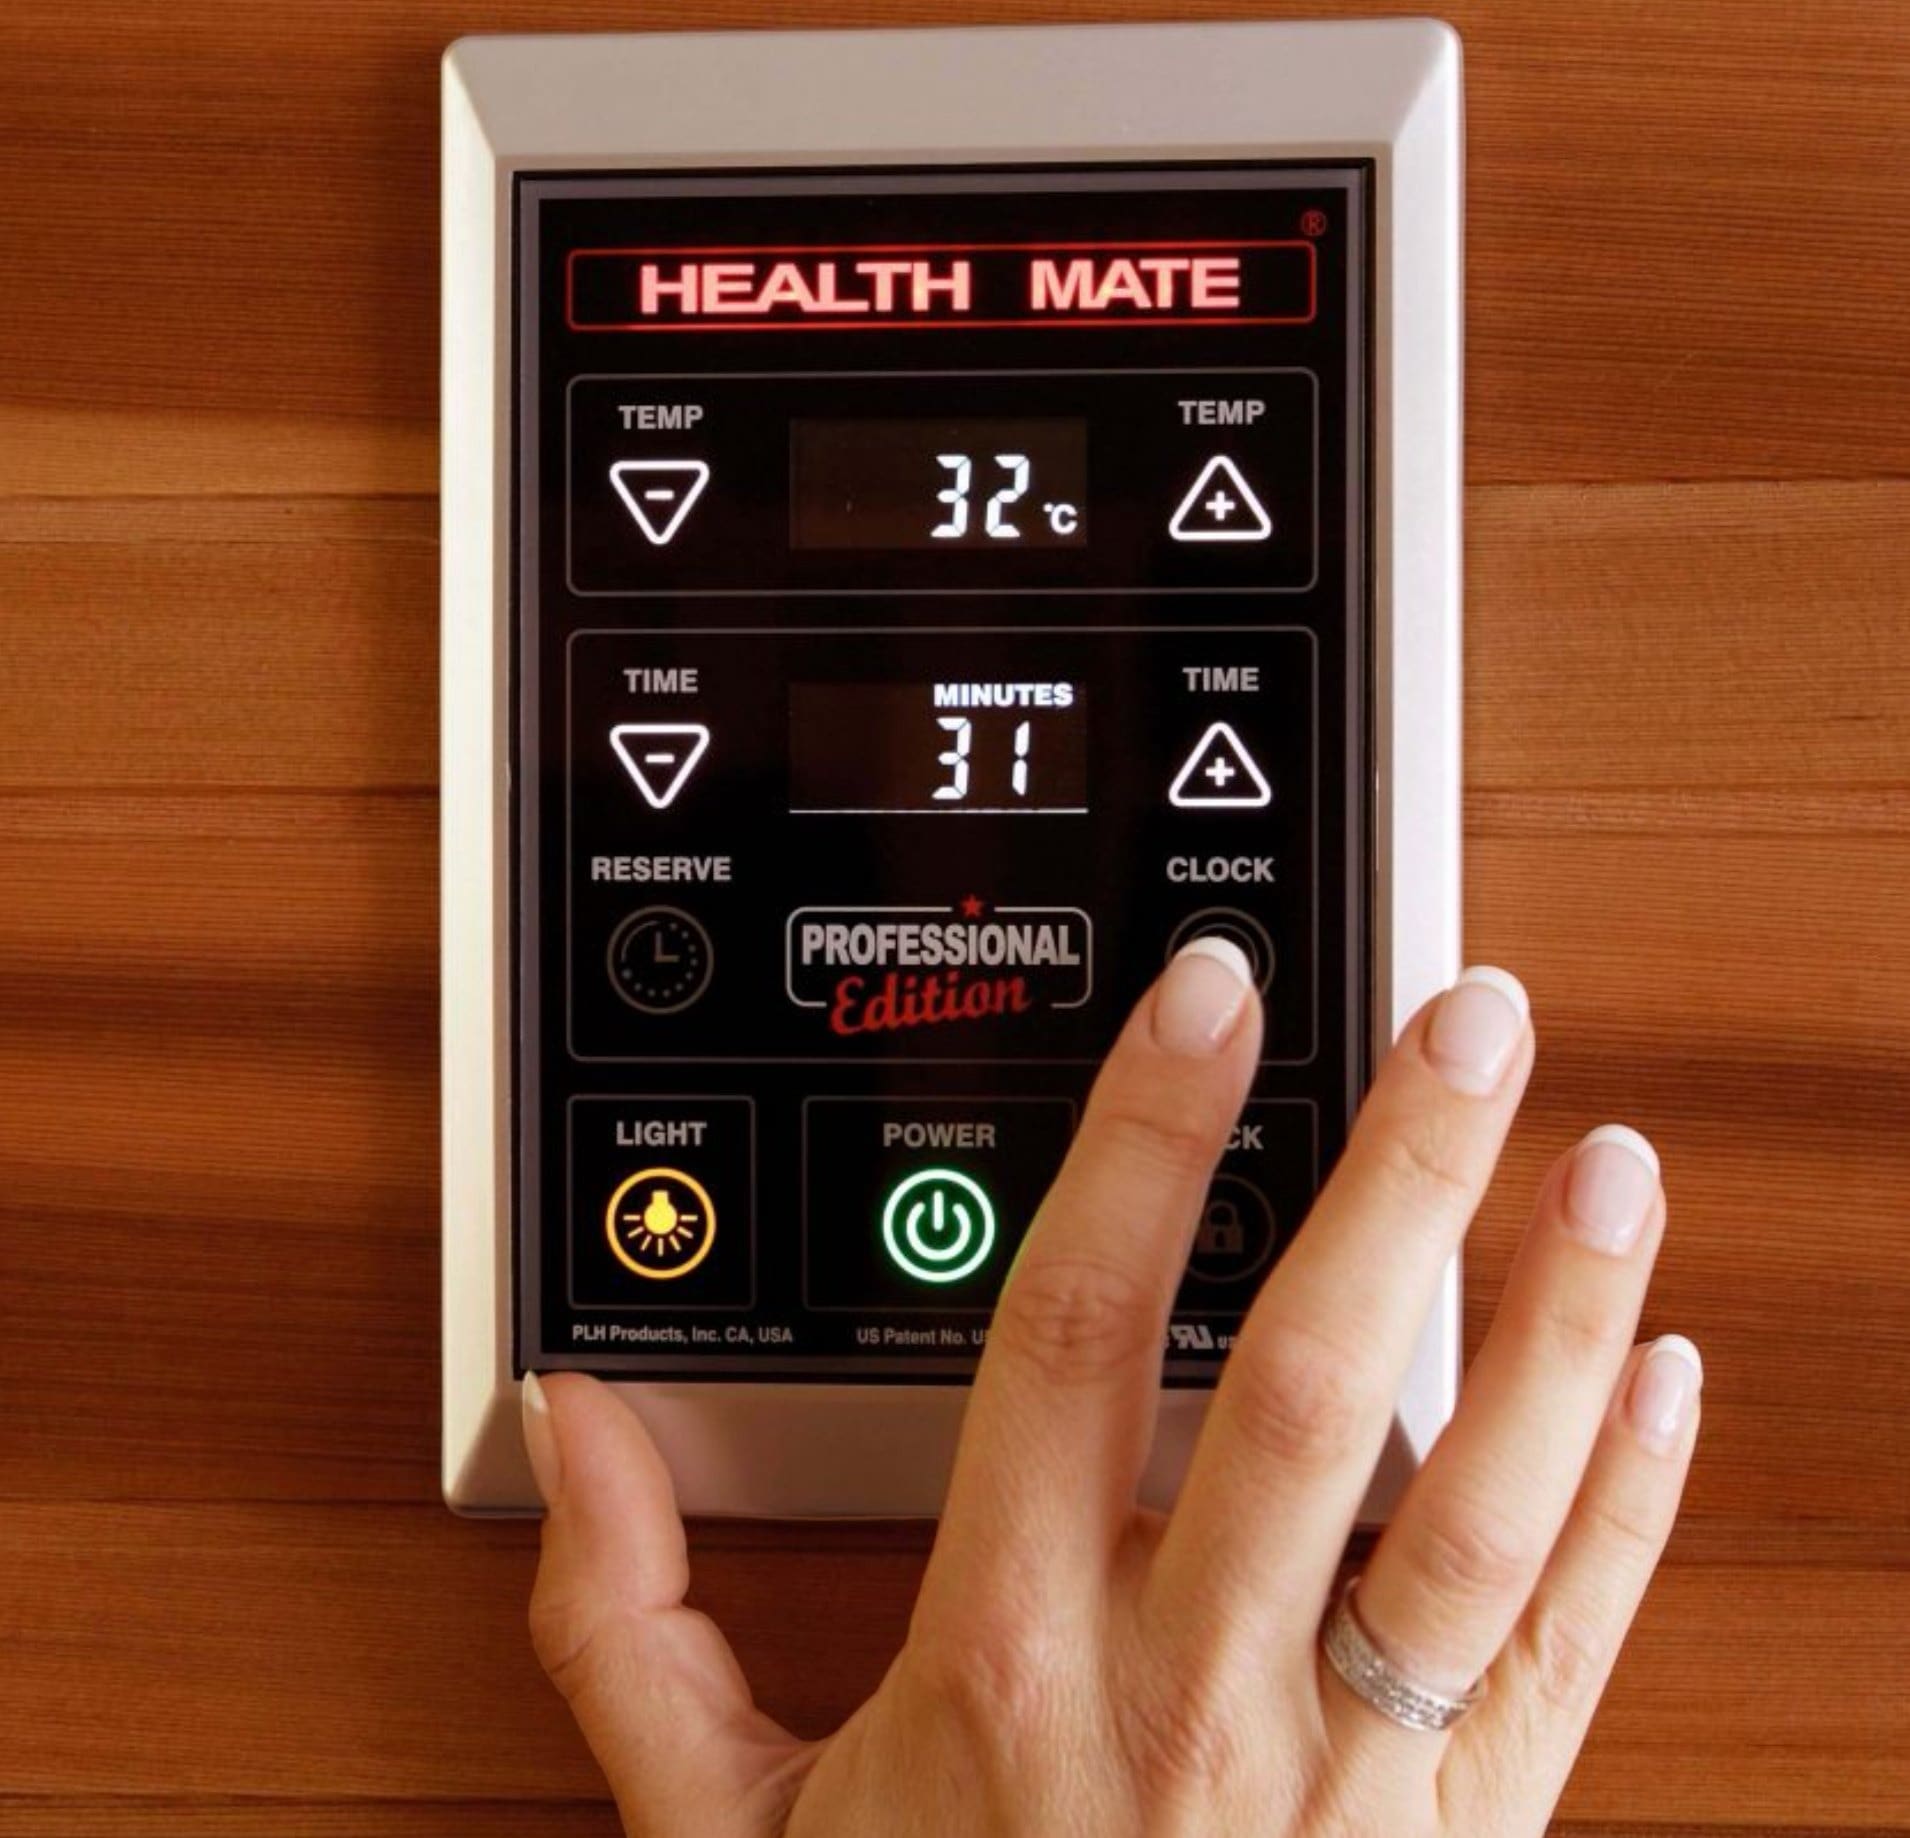 Health Mate Classic 3 Person Infrared Sauna Control Panel